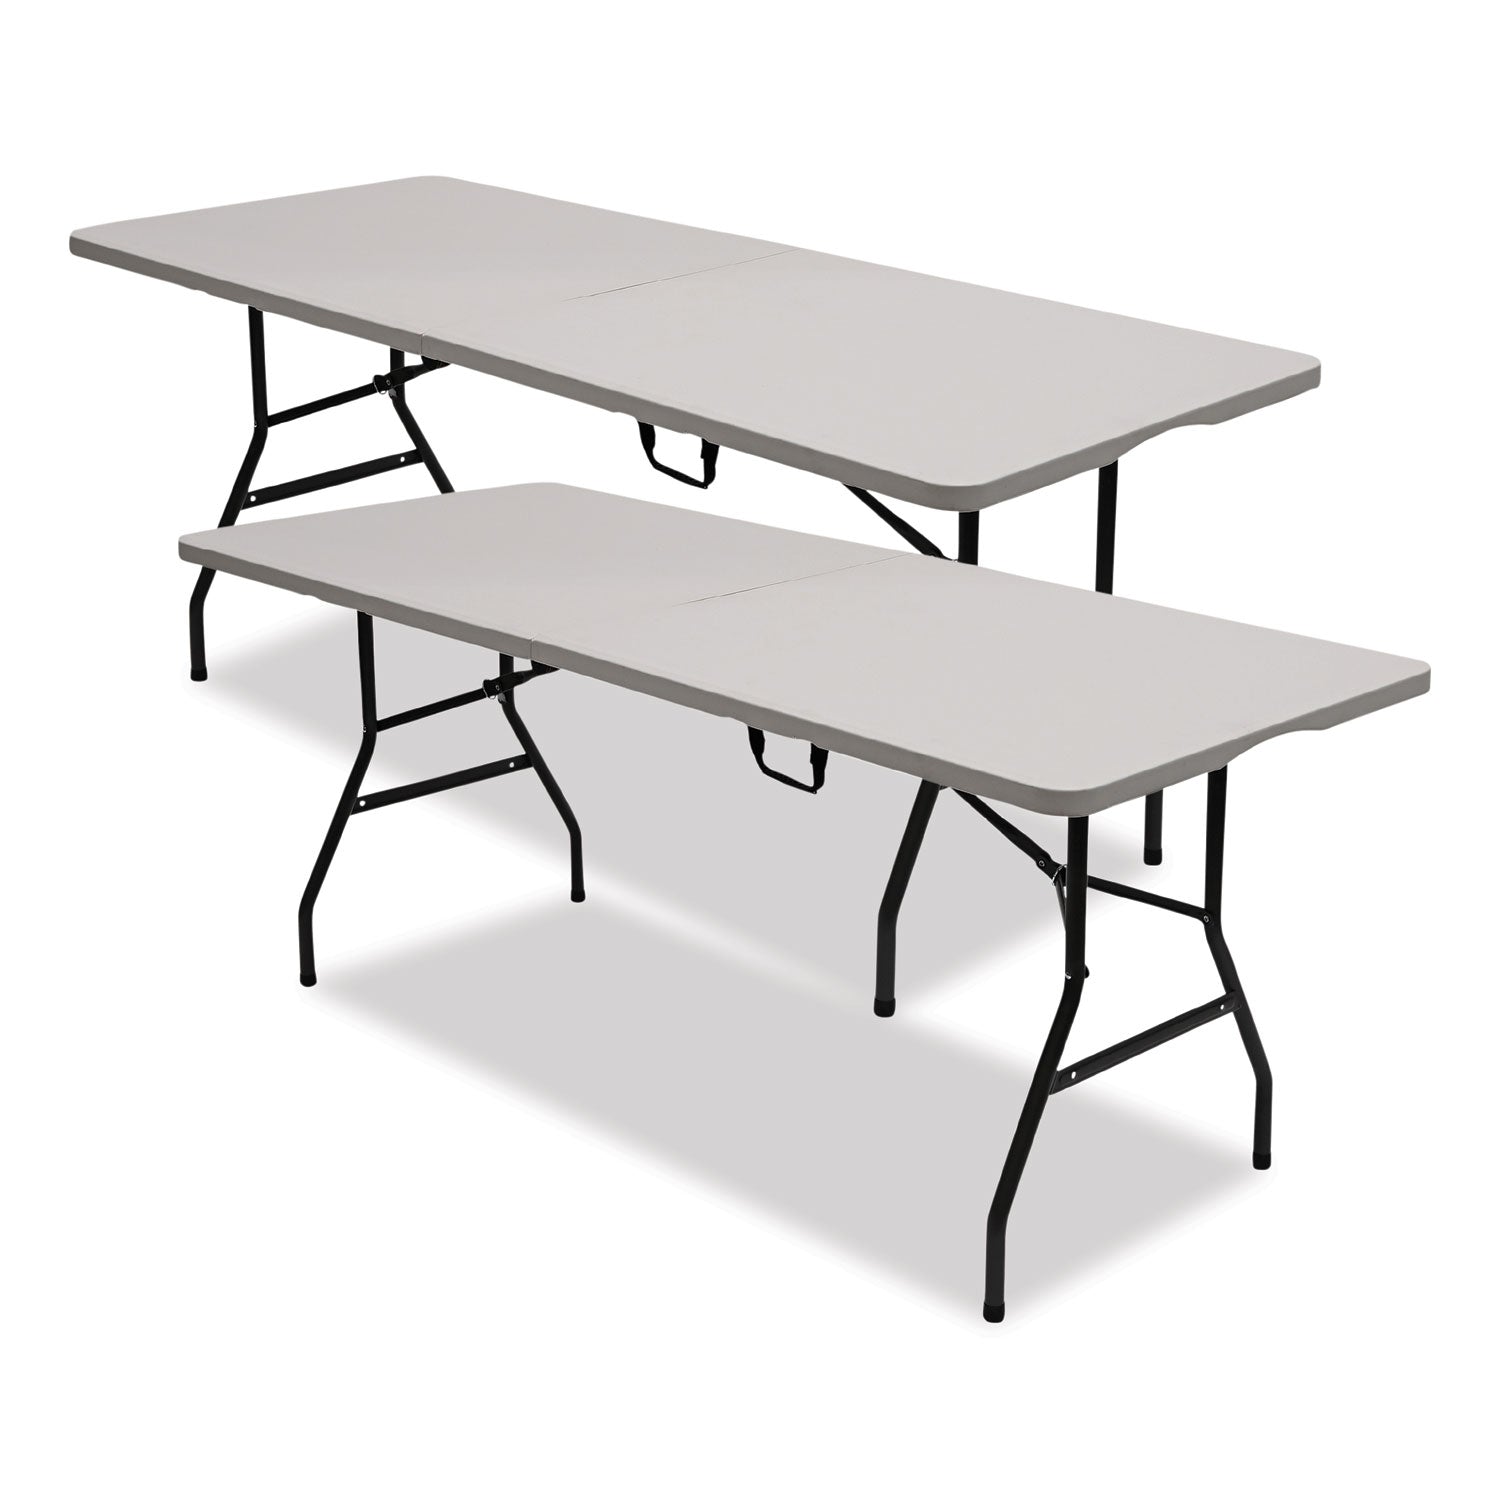 bifold-resin-folding-table-rectangular-709-x-291-x-30-white-granite-top-gray-base-legs-2-pack_ice61263 - 1